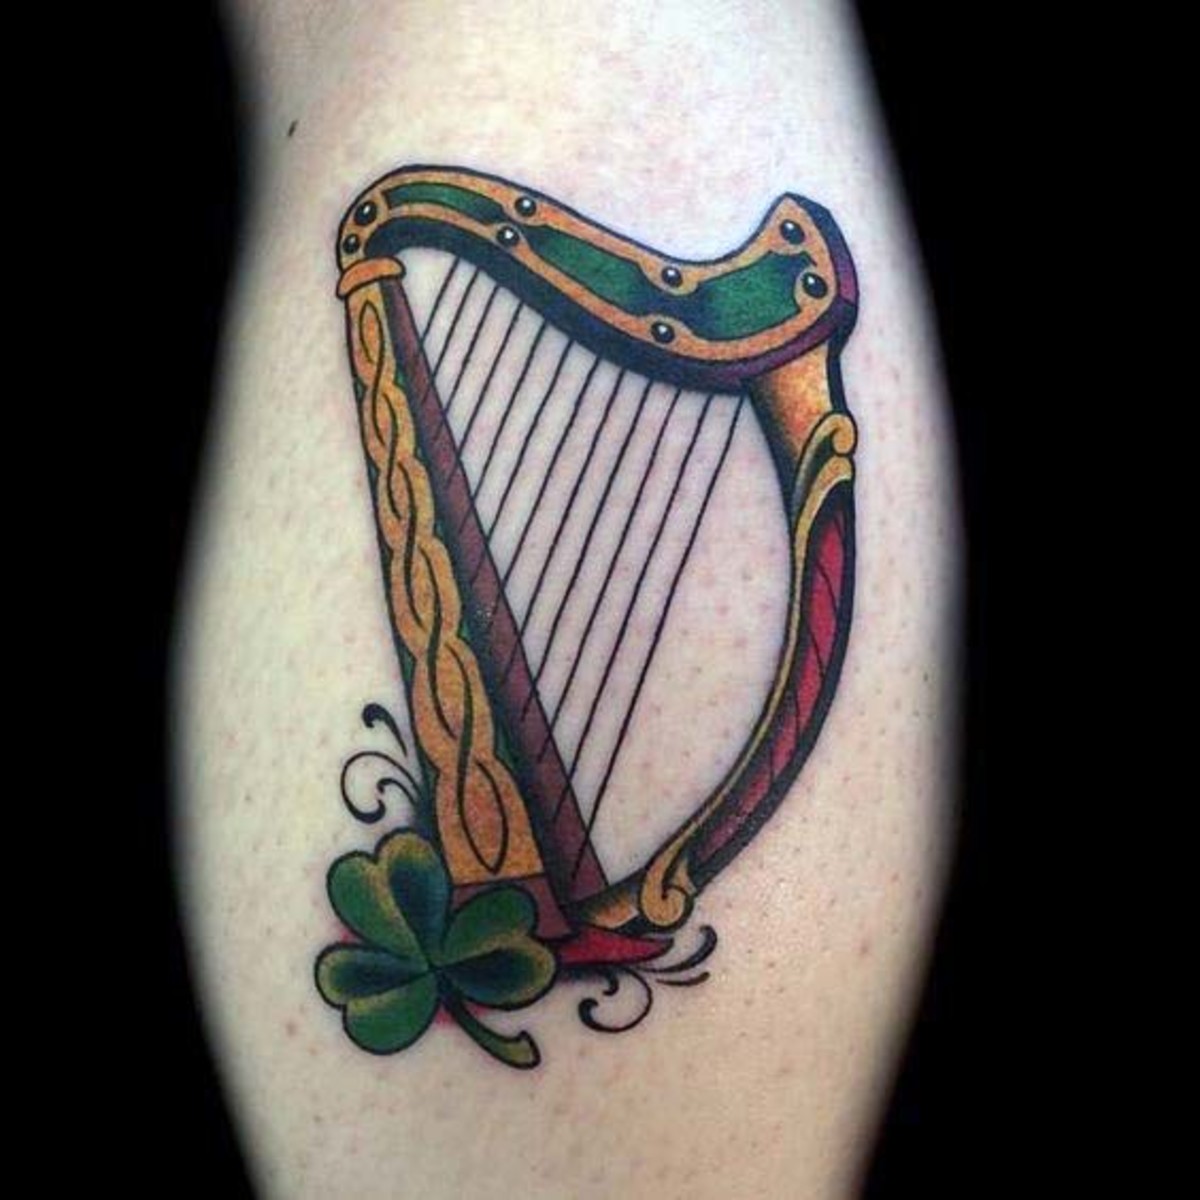 Irish Tattoos, Irish Tattoos für Männer, Irish Tattoos für Frauen, Celtic Tattoos, Four-Leaf Clover Tattoos, St. Patricks Day, St Patricks Day Tattoos, Claddagh Tattoos, Wolf Tattoos, Irish Tattoo Inspiration, Leprechaun Tattoos, Gaelic Tattoos, INKED